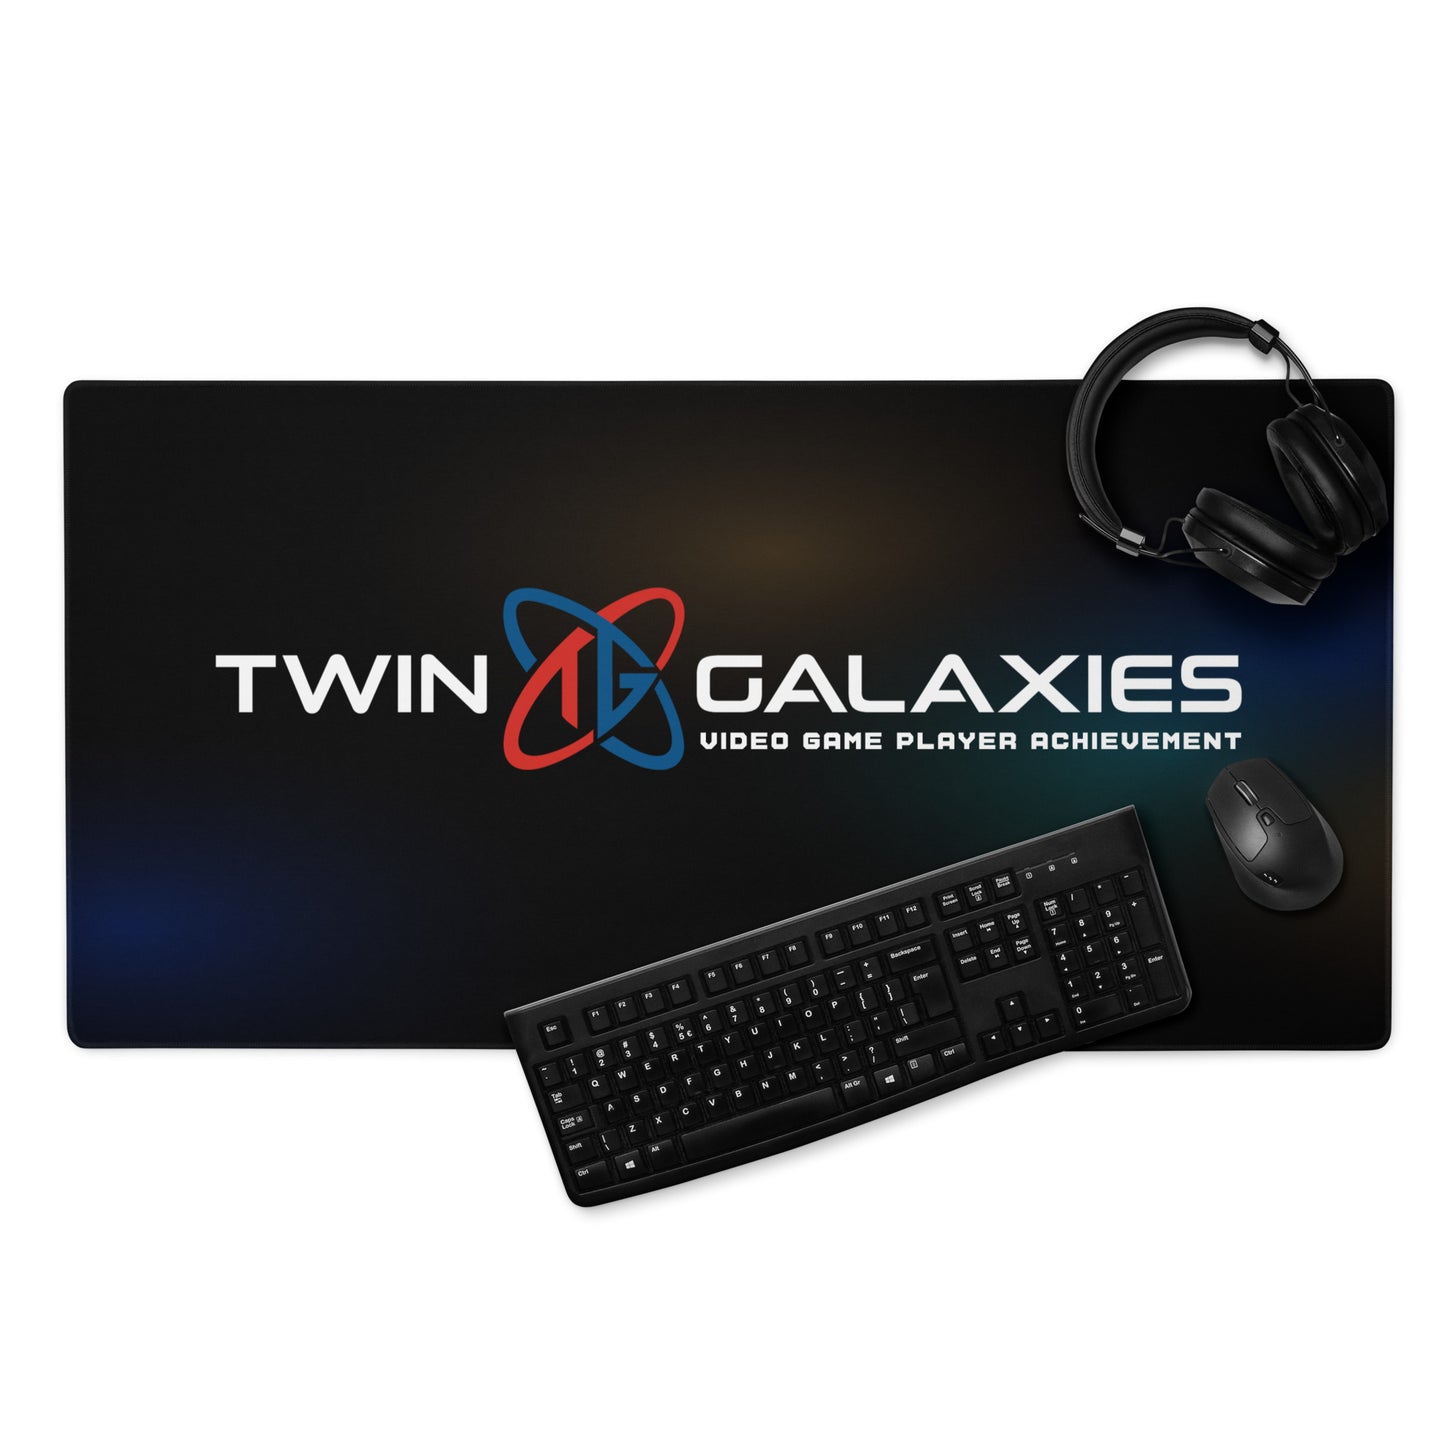 Twin Galaxies Gaming Mouse Pad - DARK